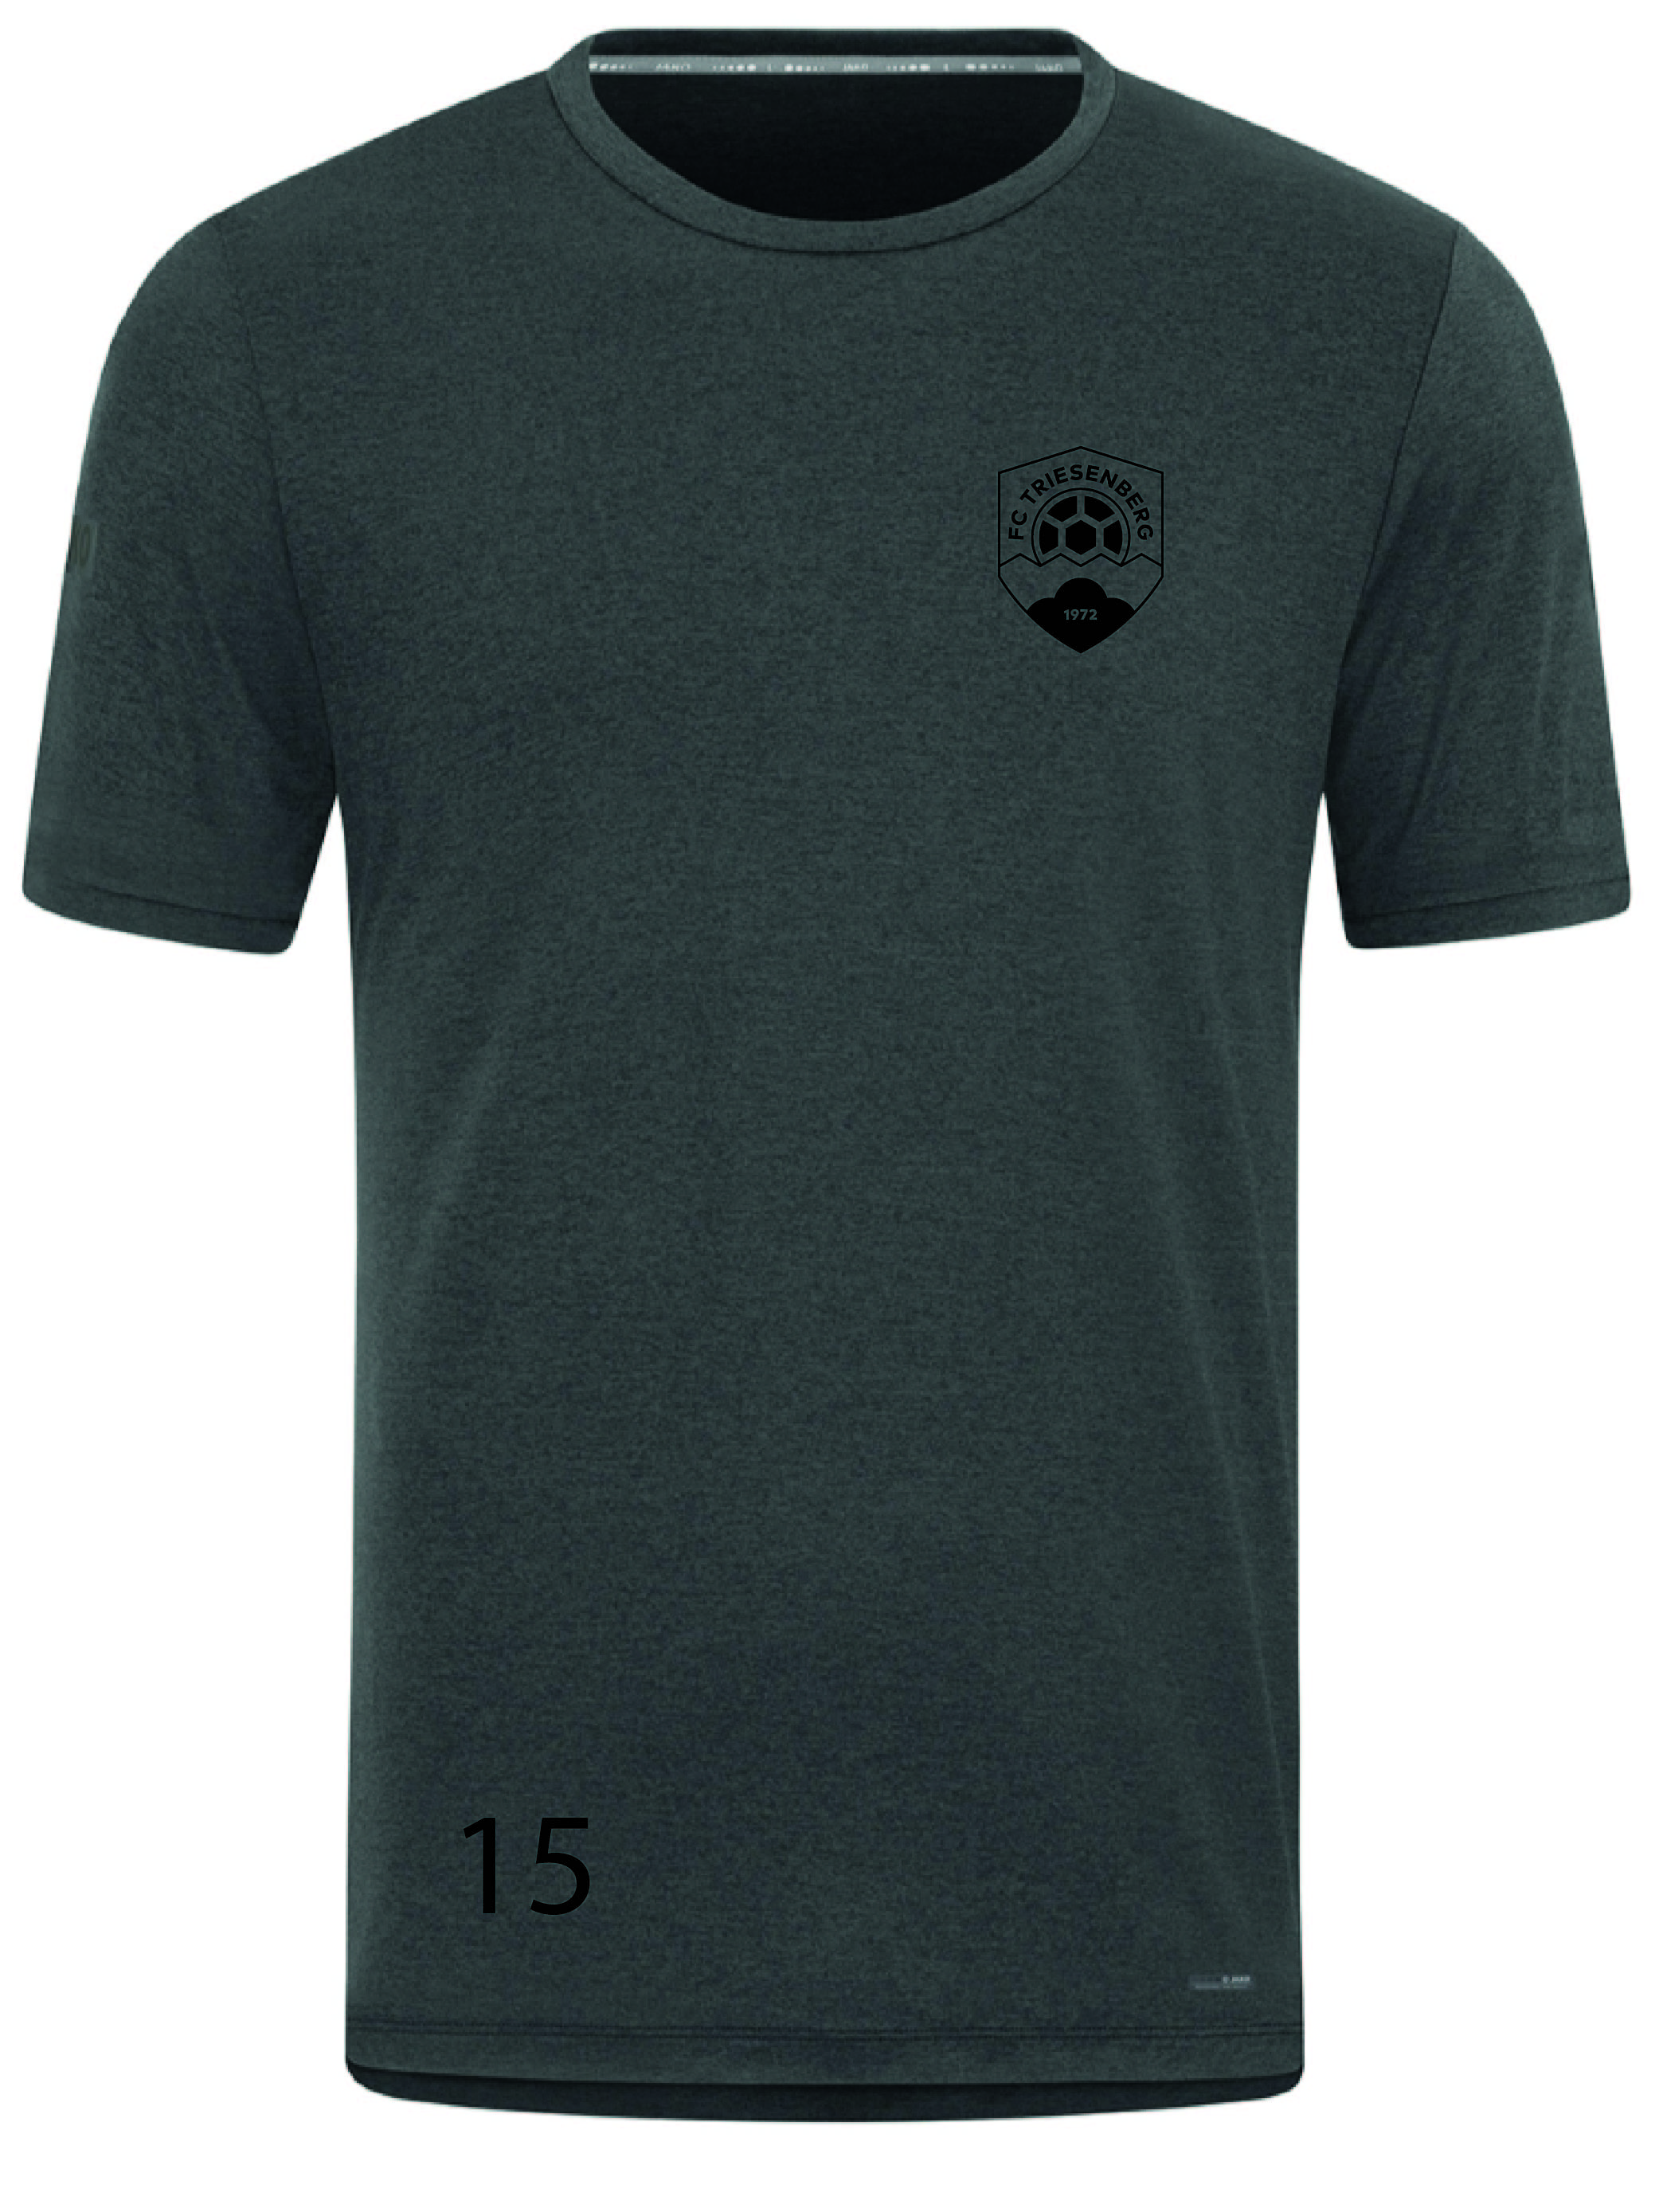 FCTB T-Shirt Pro Casual